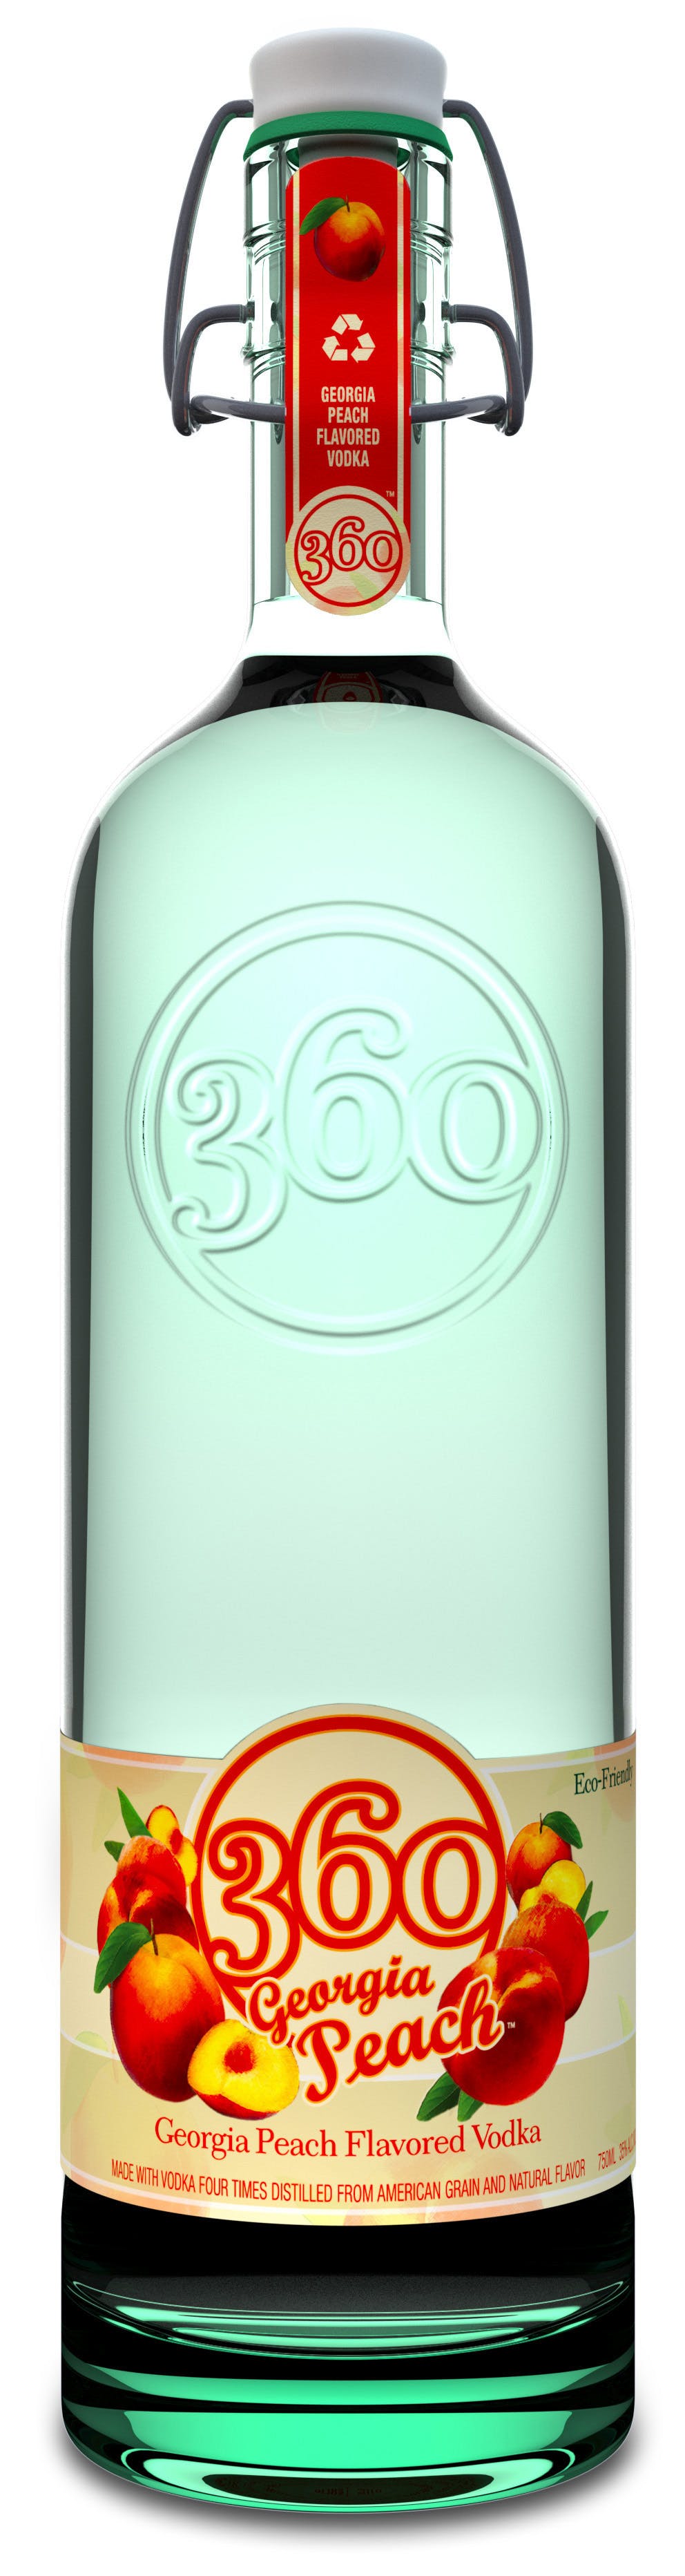 Belvedere Vodka 750ml - Argonaut Wine & Liquor